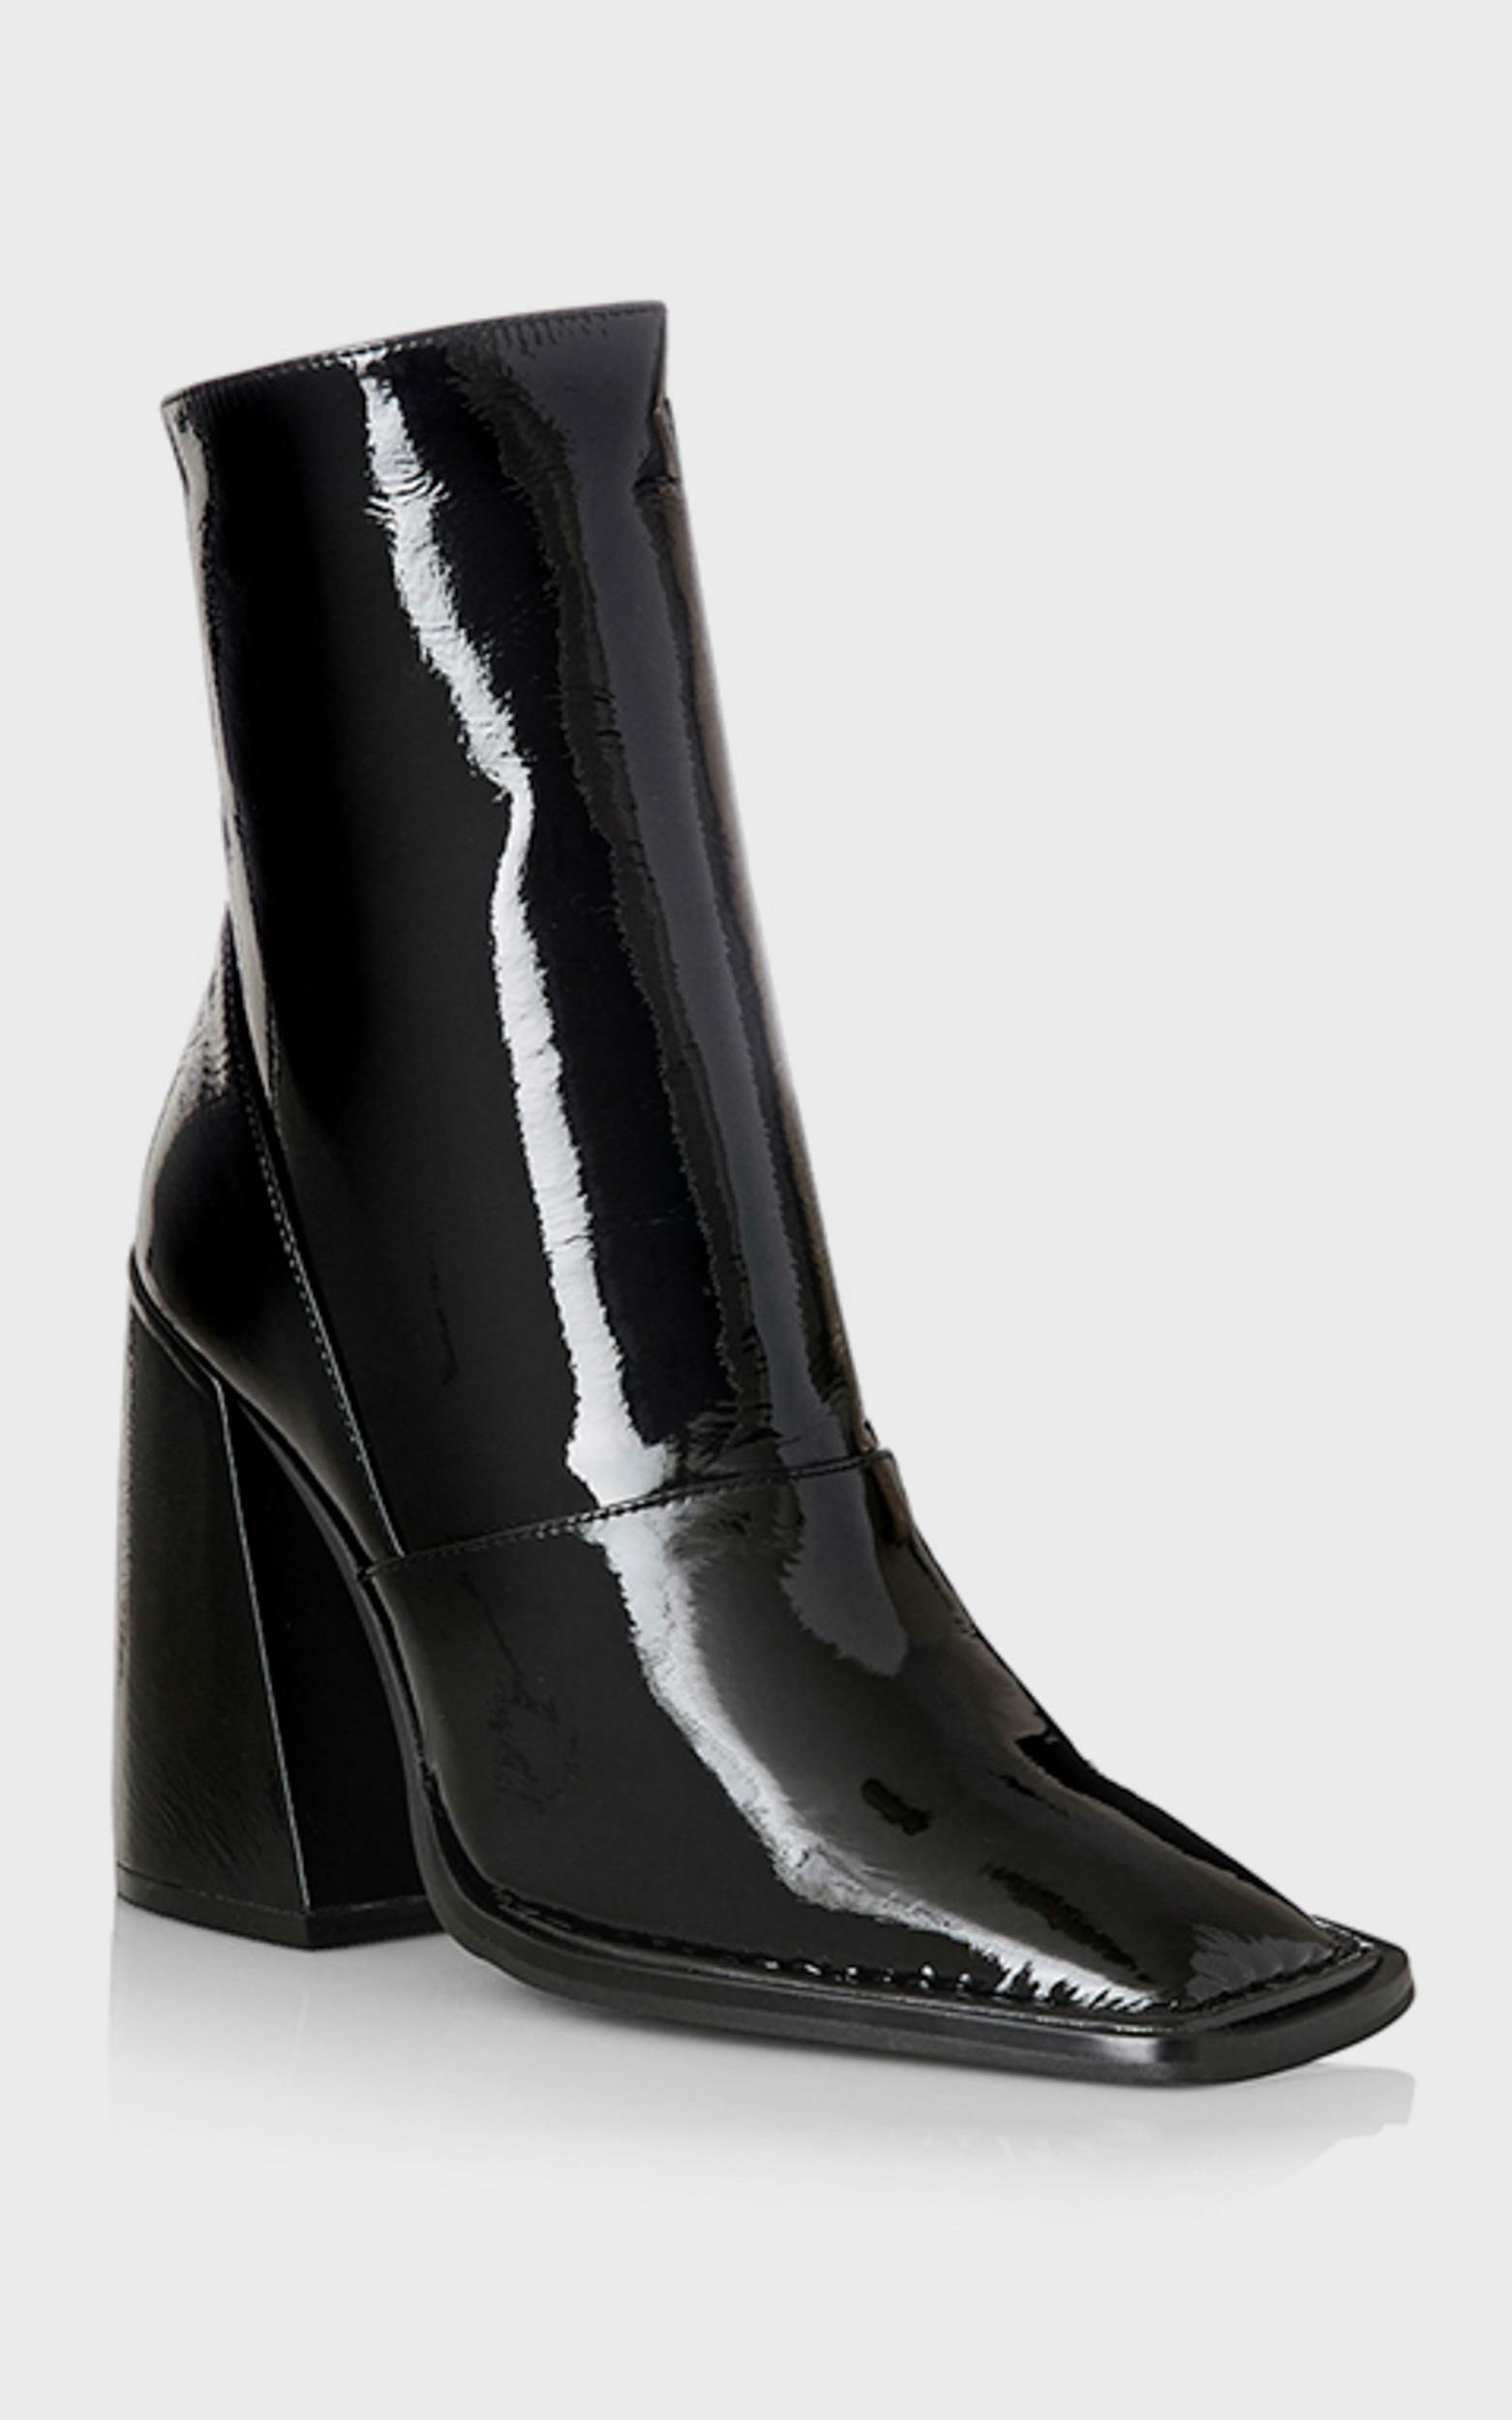 Alias Mae - Eden Boots in Black Patent | Showpo